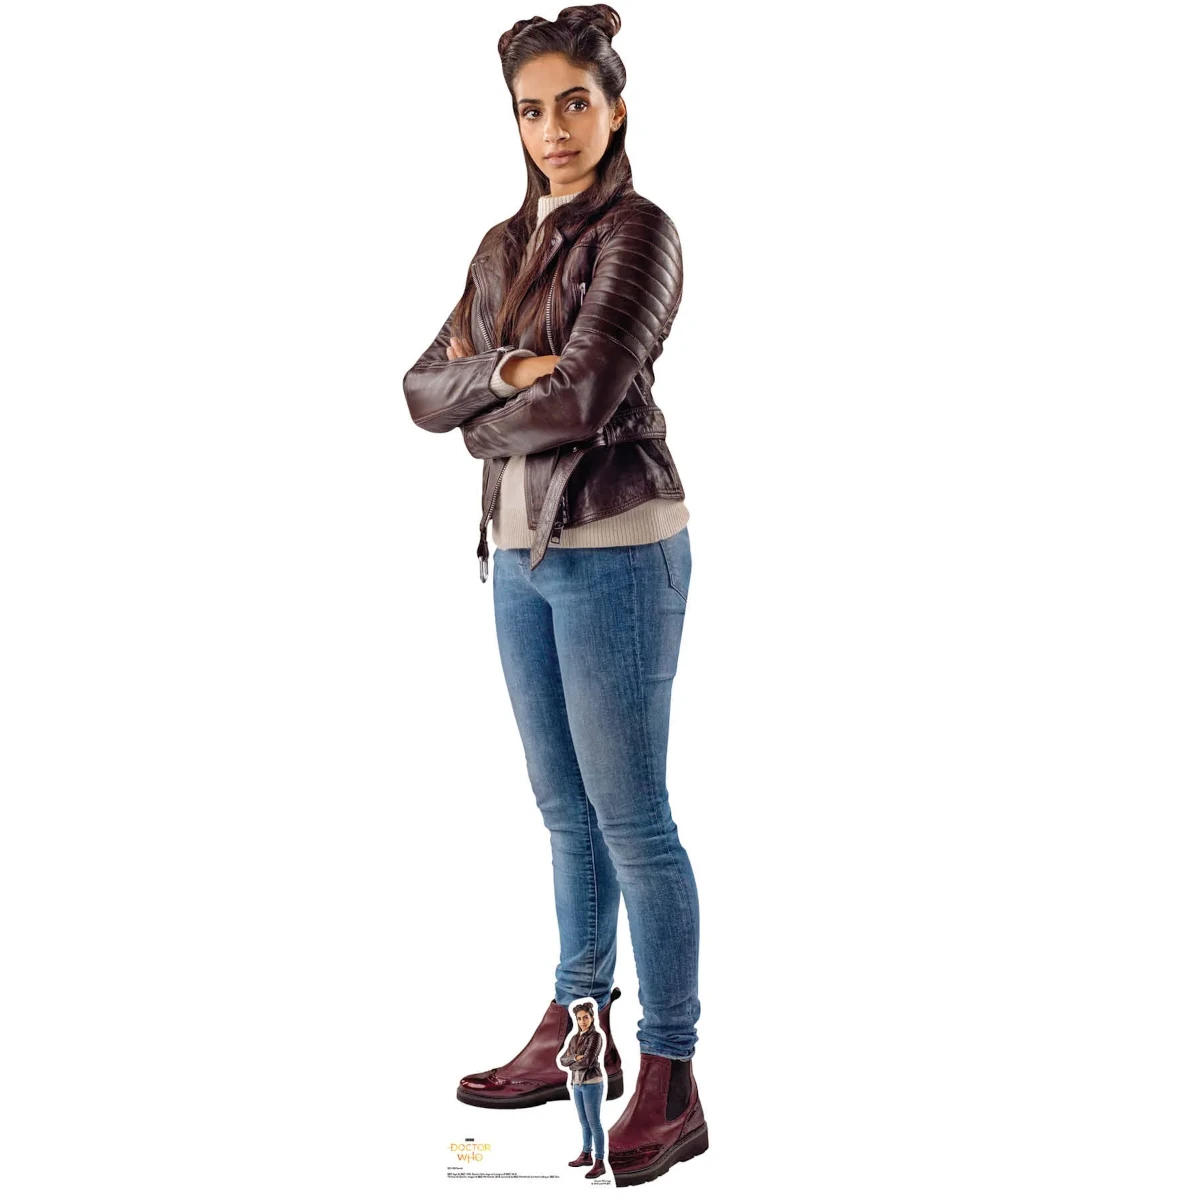 SC1198 Yasmin Khan 'Mandip Gill' (Doctor Who) Official Lifesize + Mini Cardboard Cutout Standee Front